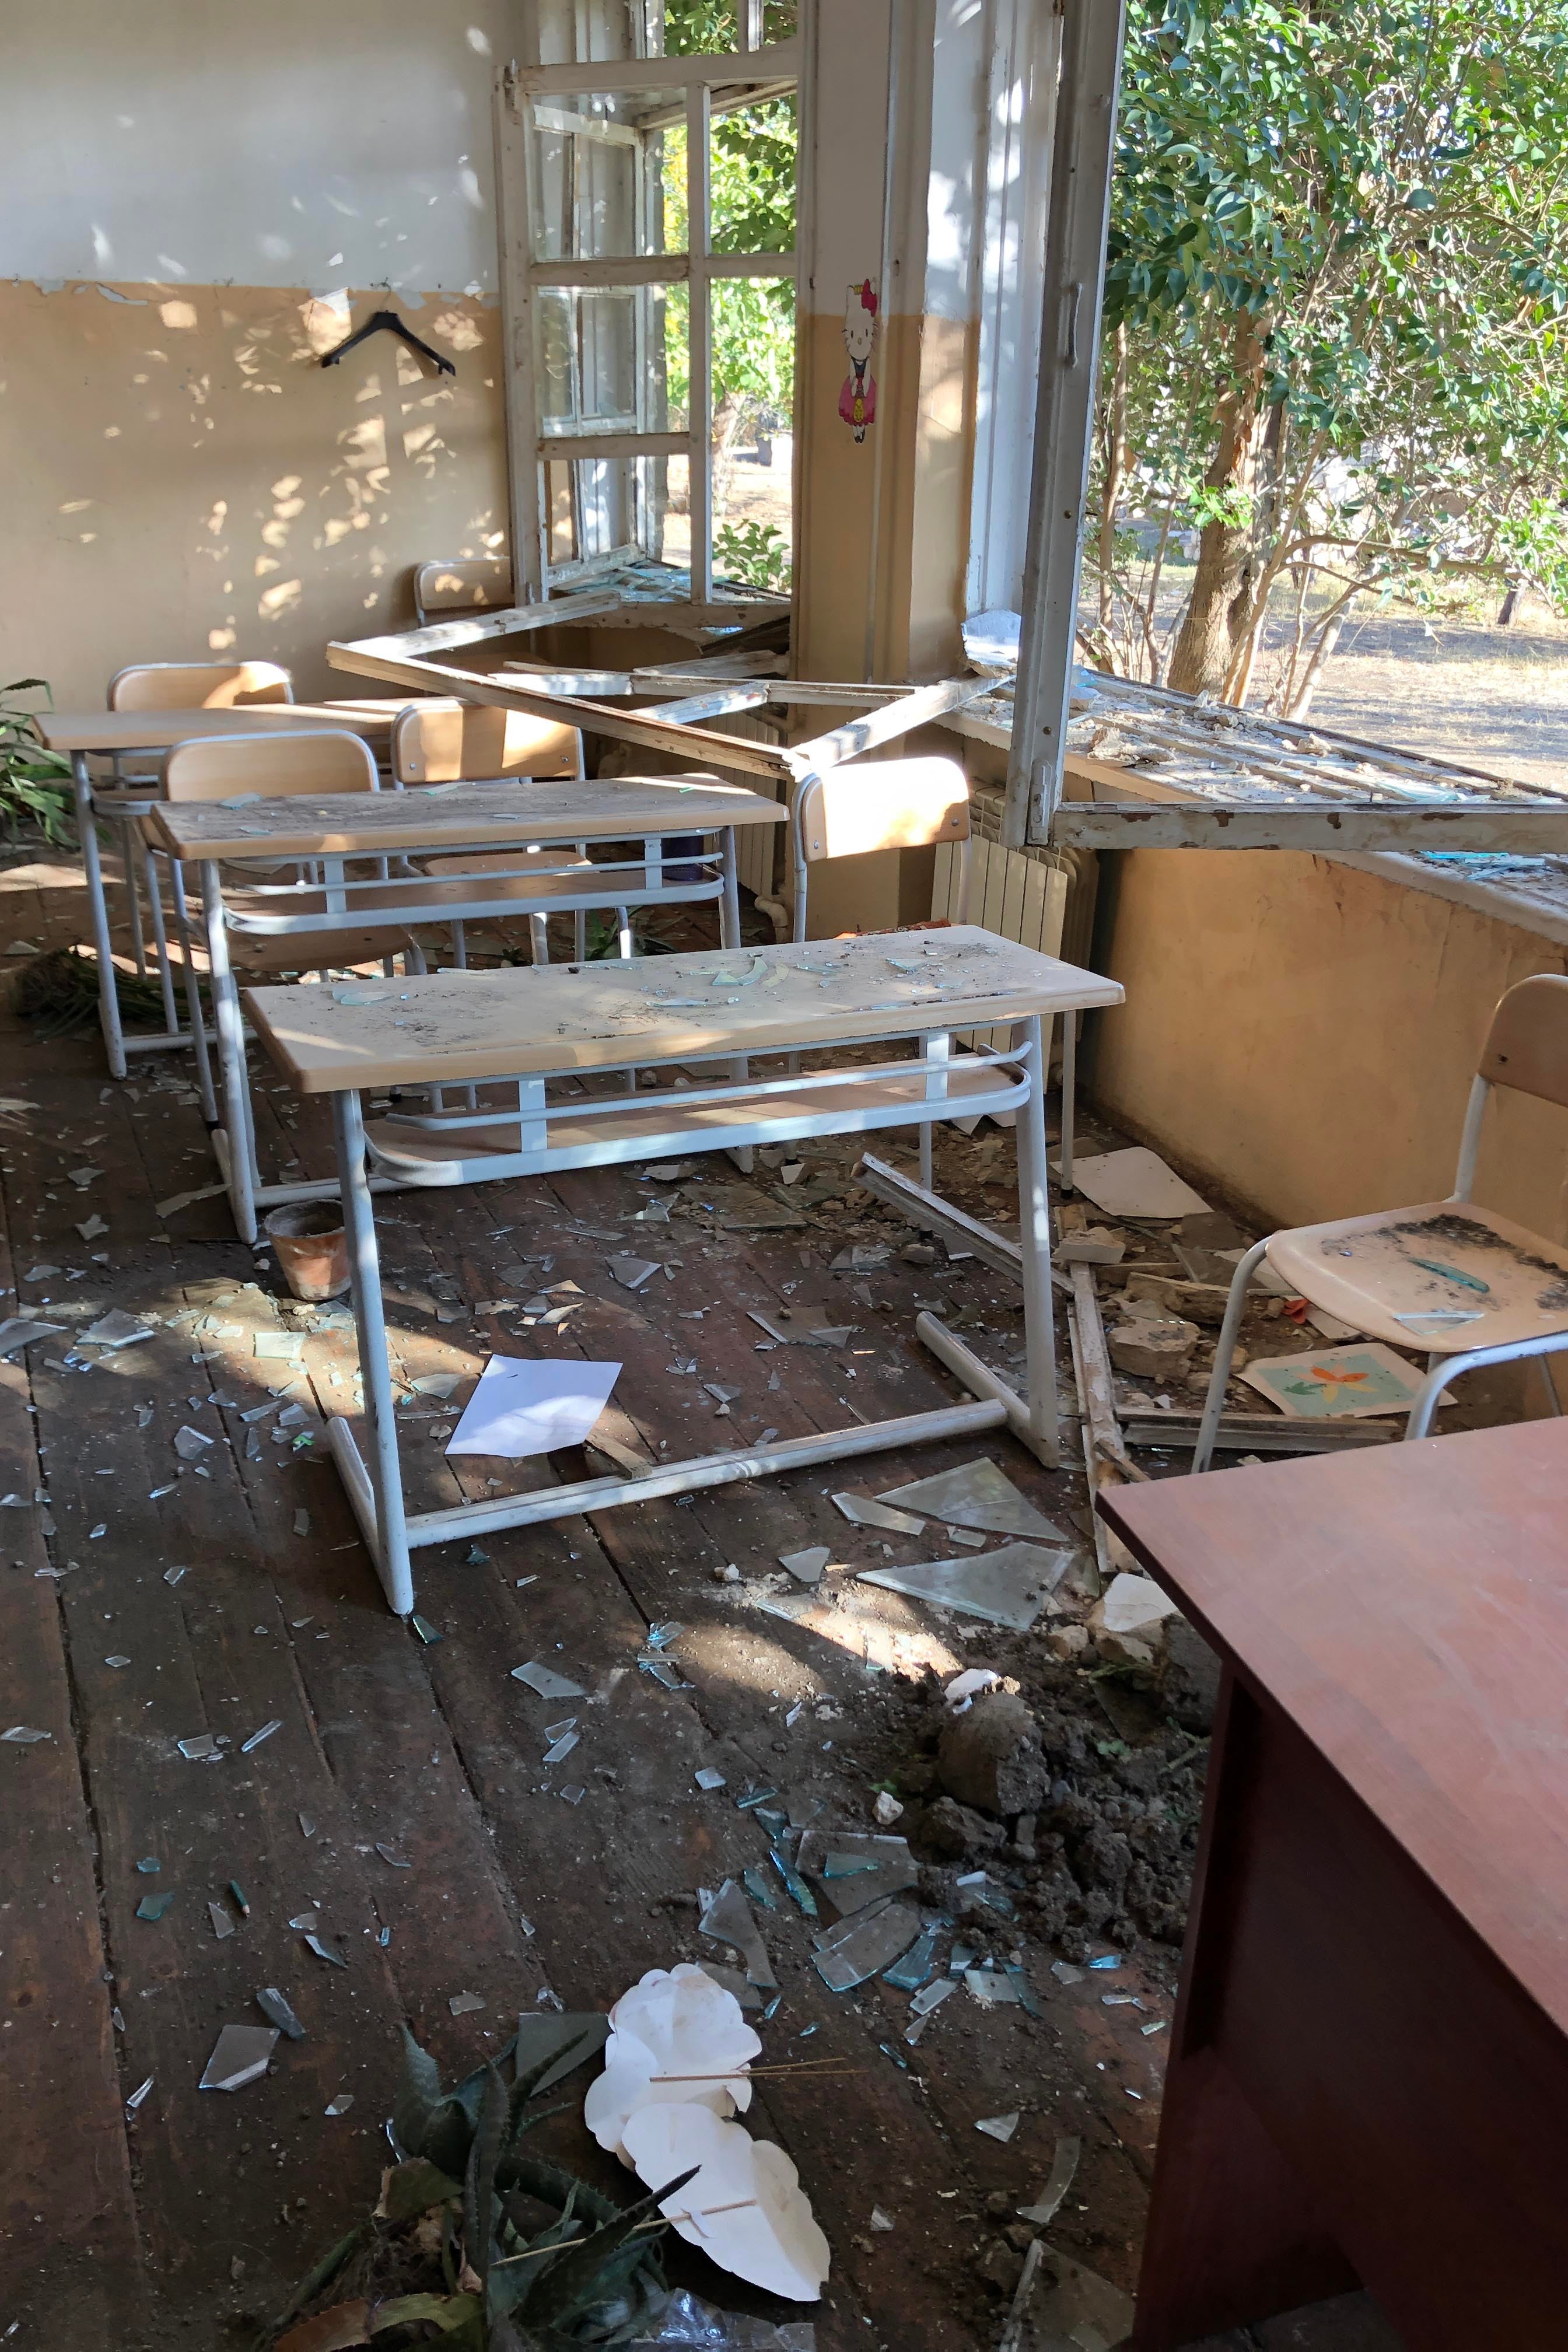 Damaged desks in a classroom